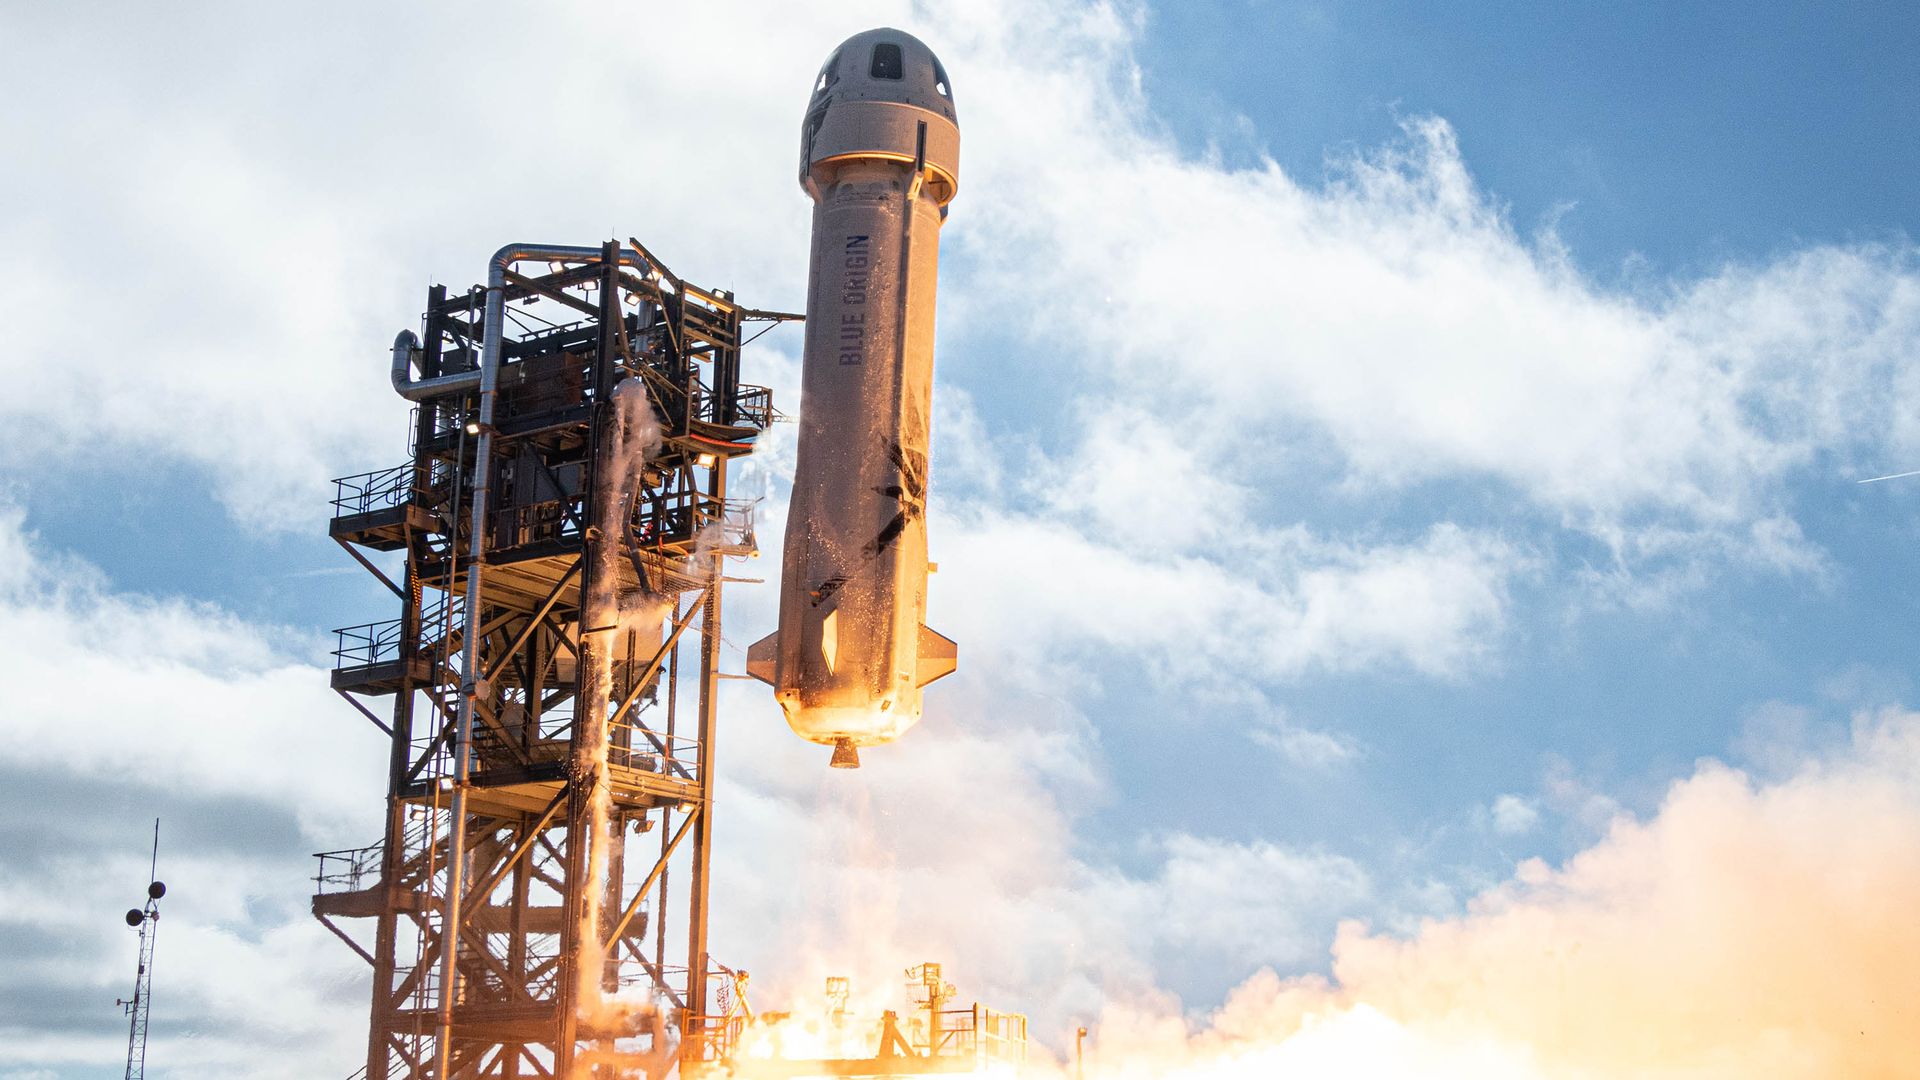 A Blue Origin rocket takes flight